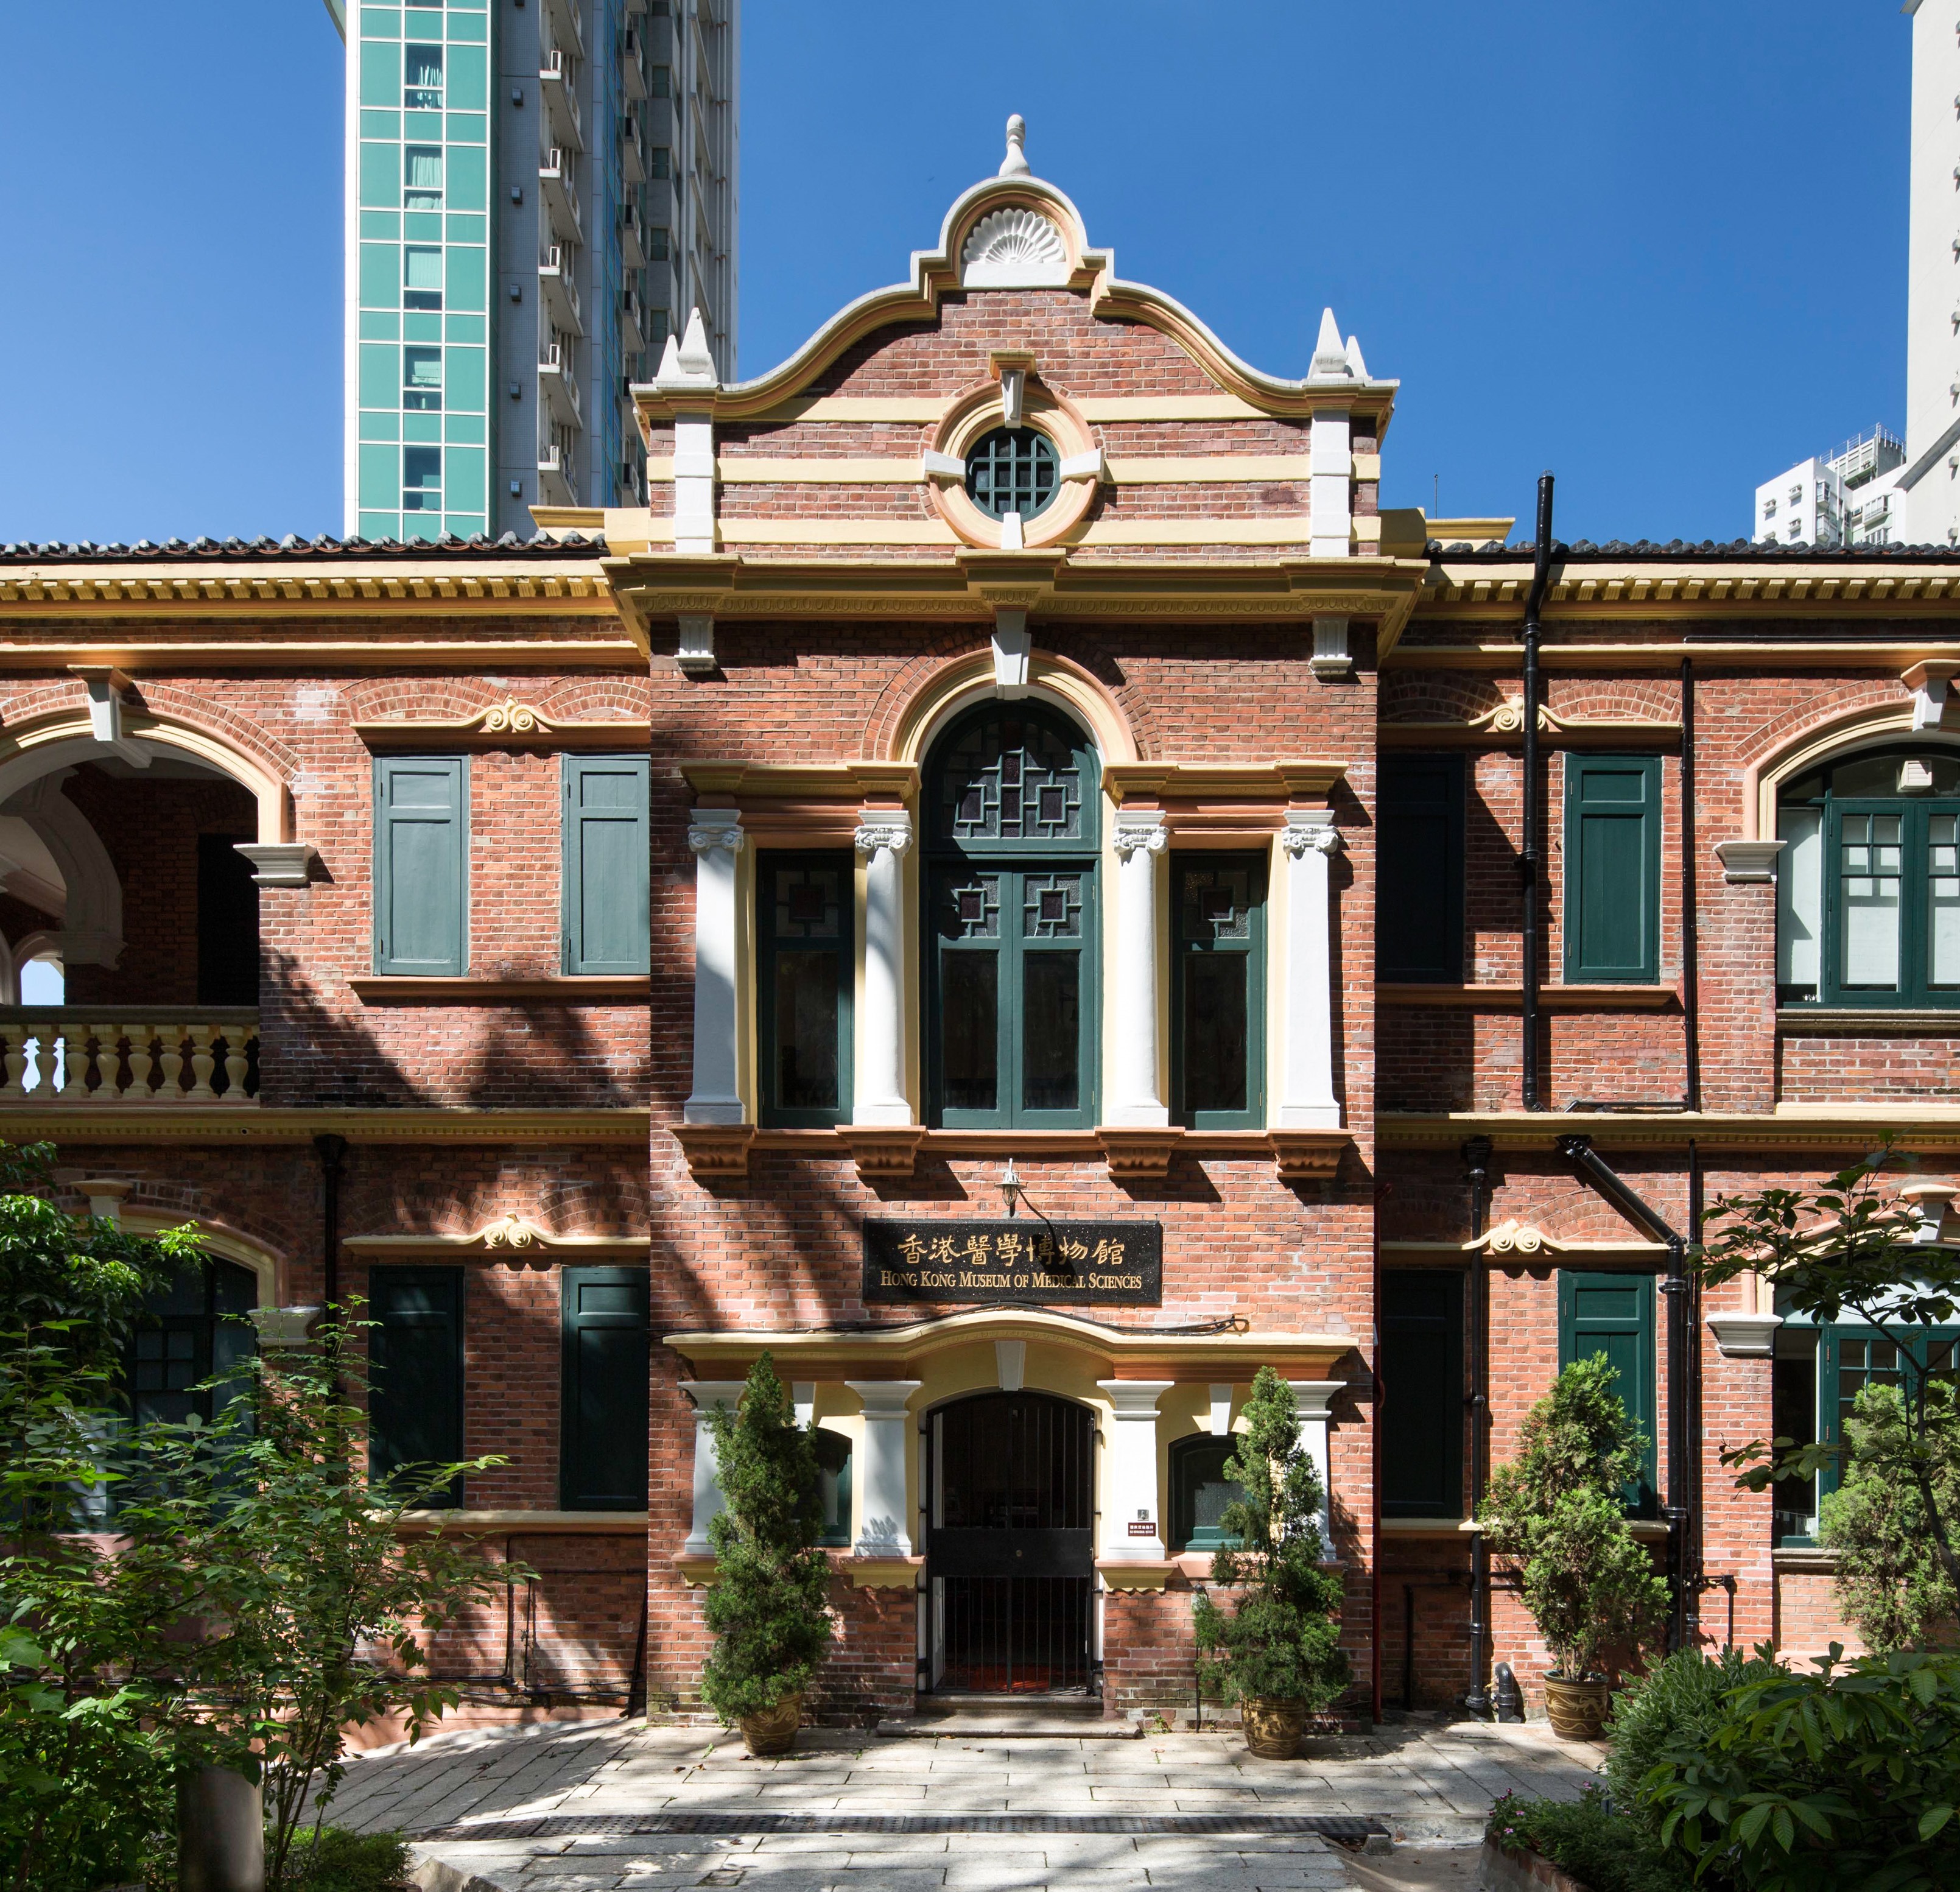 Hong Kong Museum of Medical Sciences